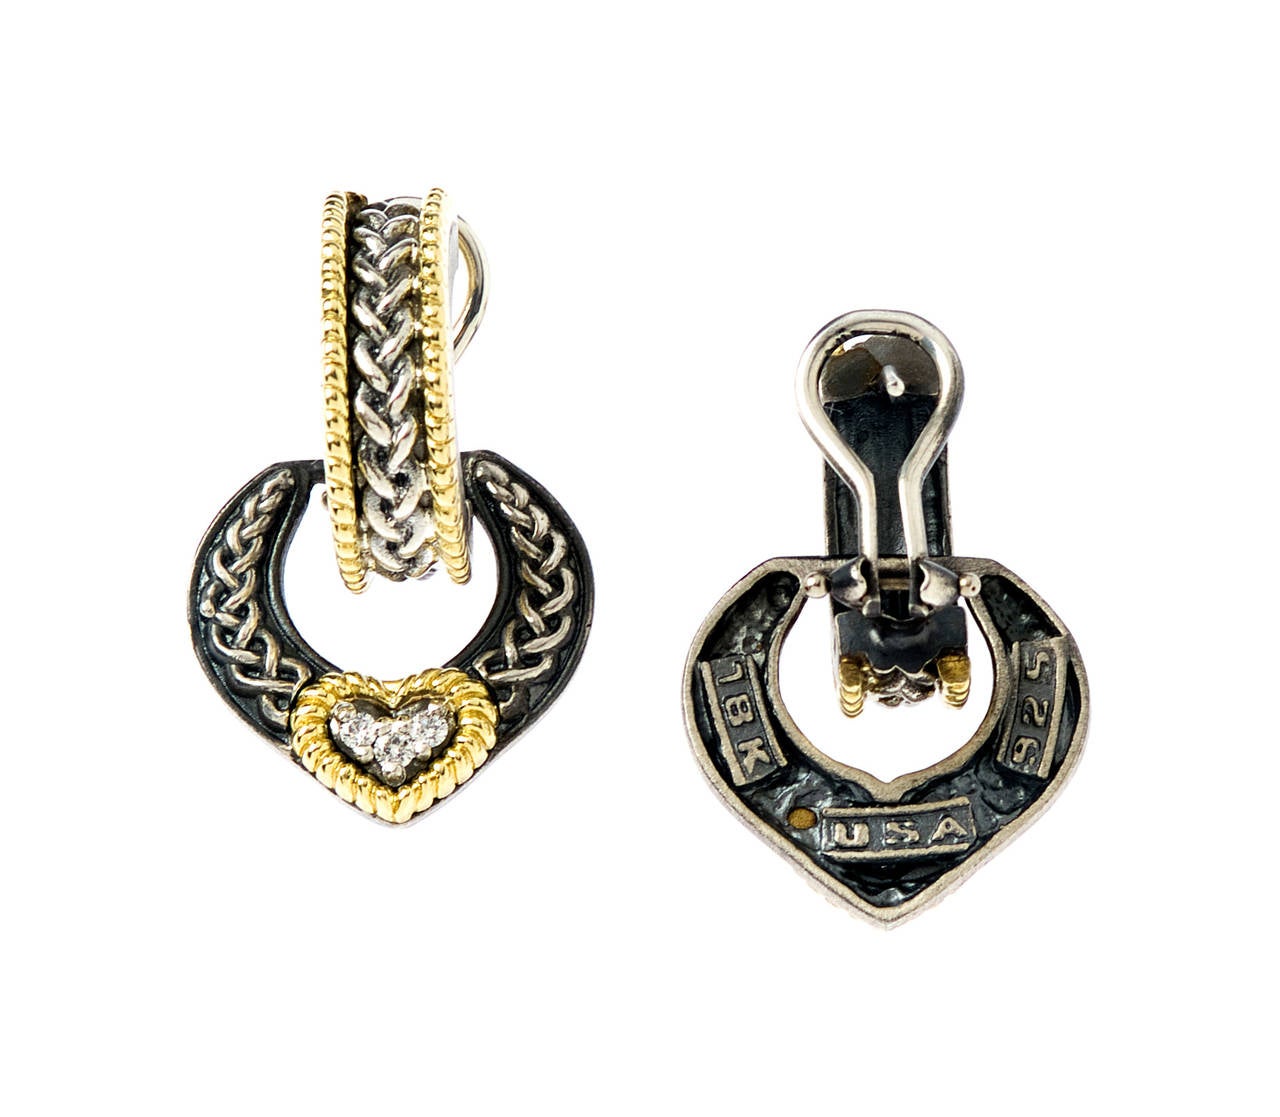 Stambolian Sterling Silver 18 Karat Gold Diamond Heart Dangle Earrings

From the Stambolian 